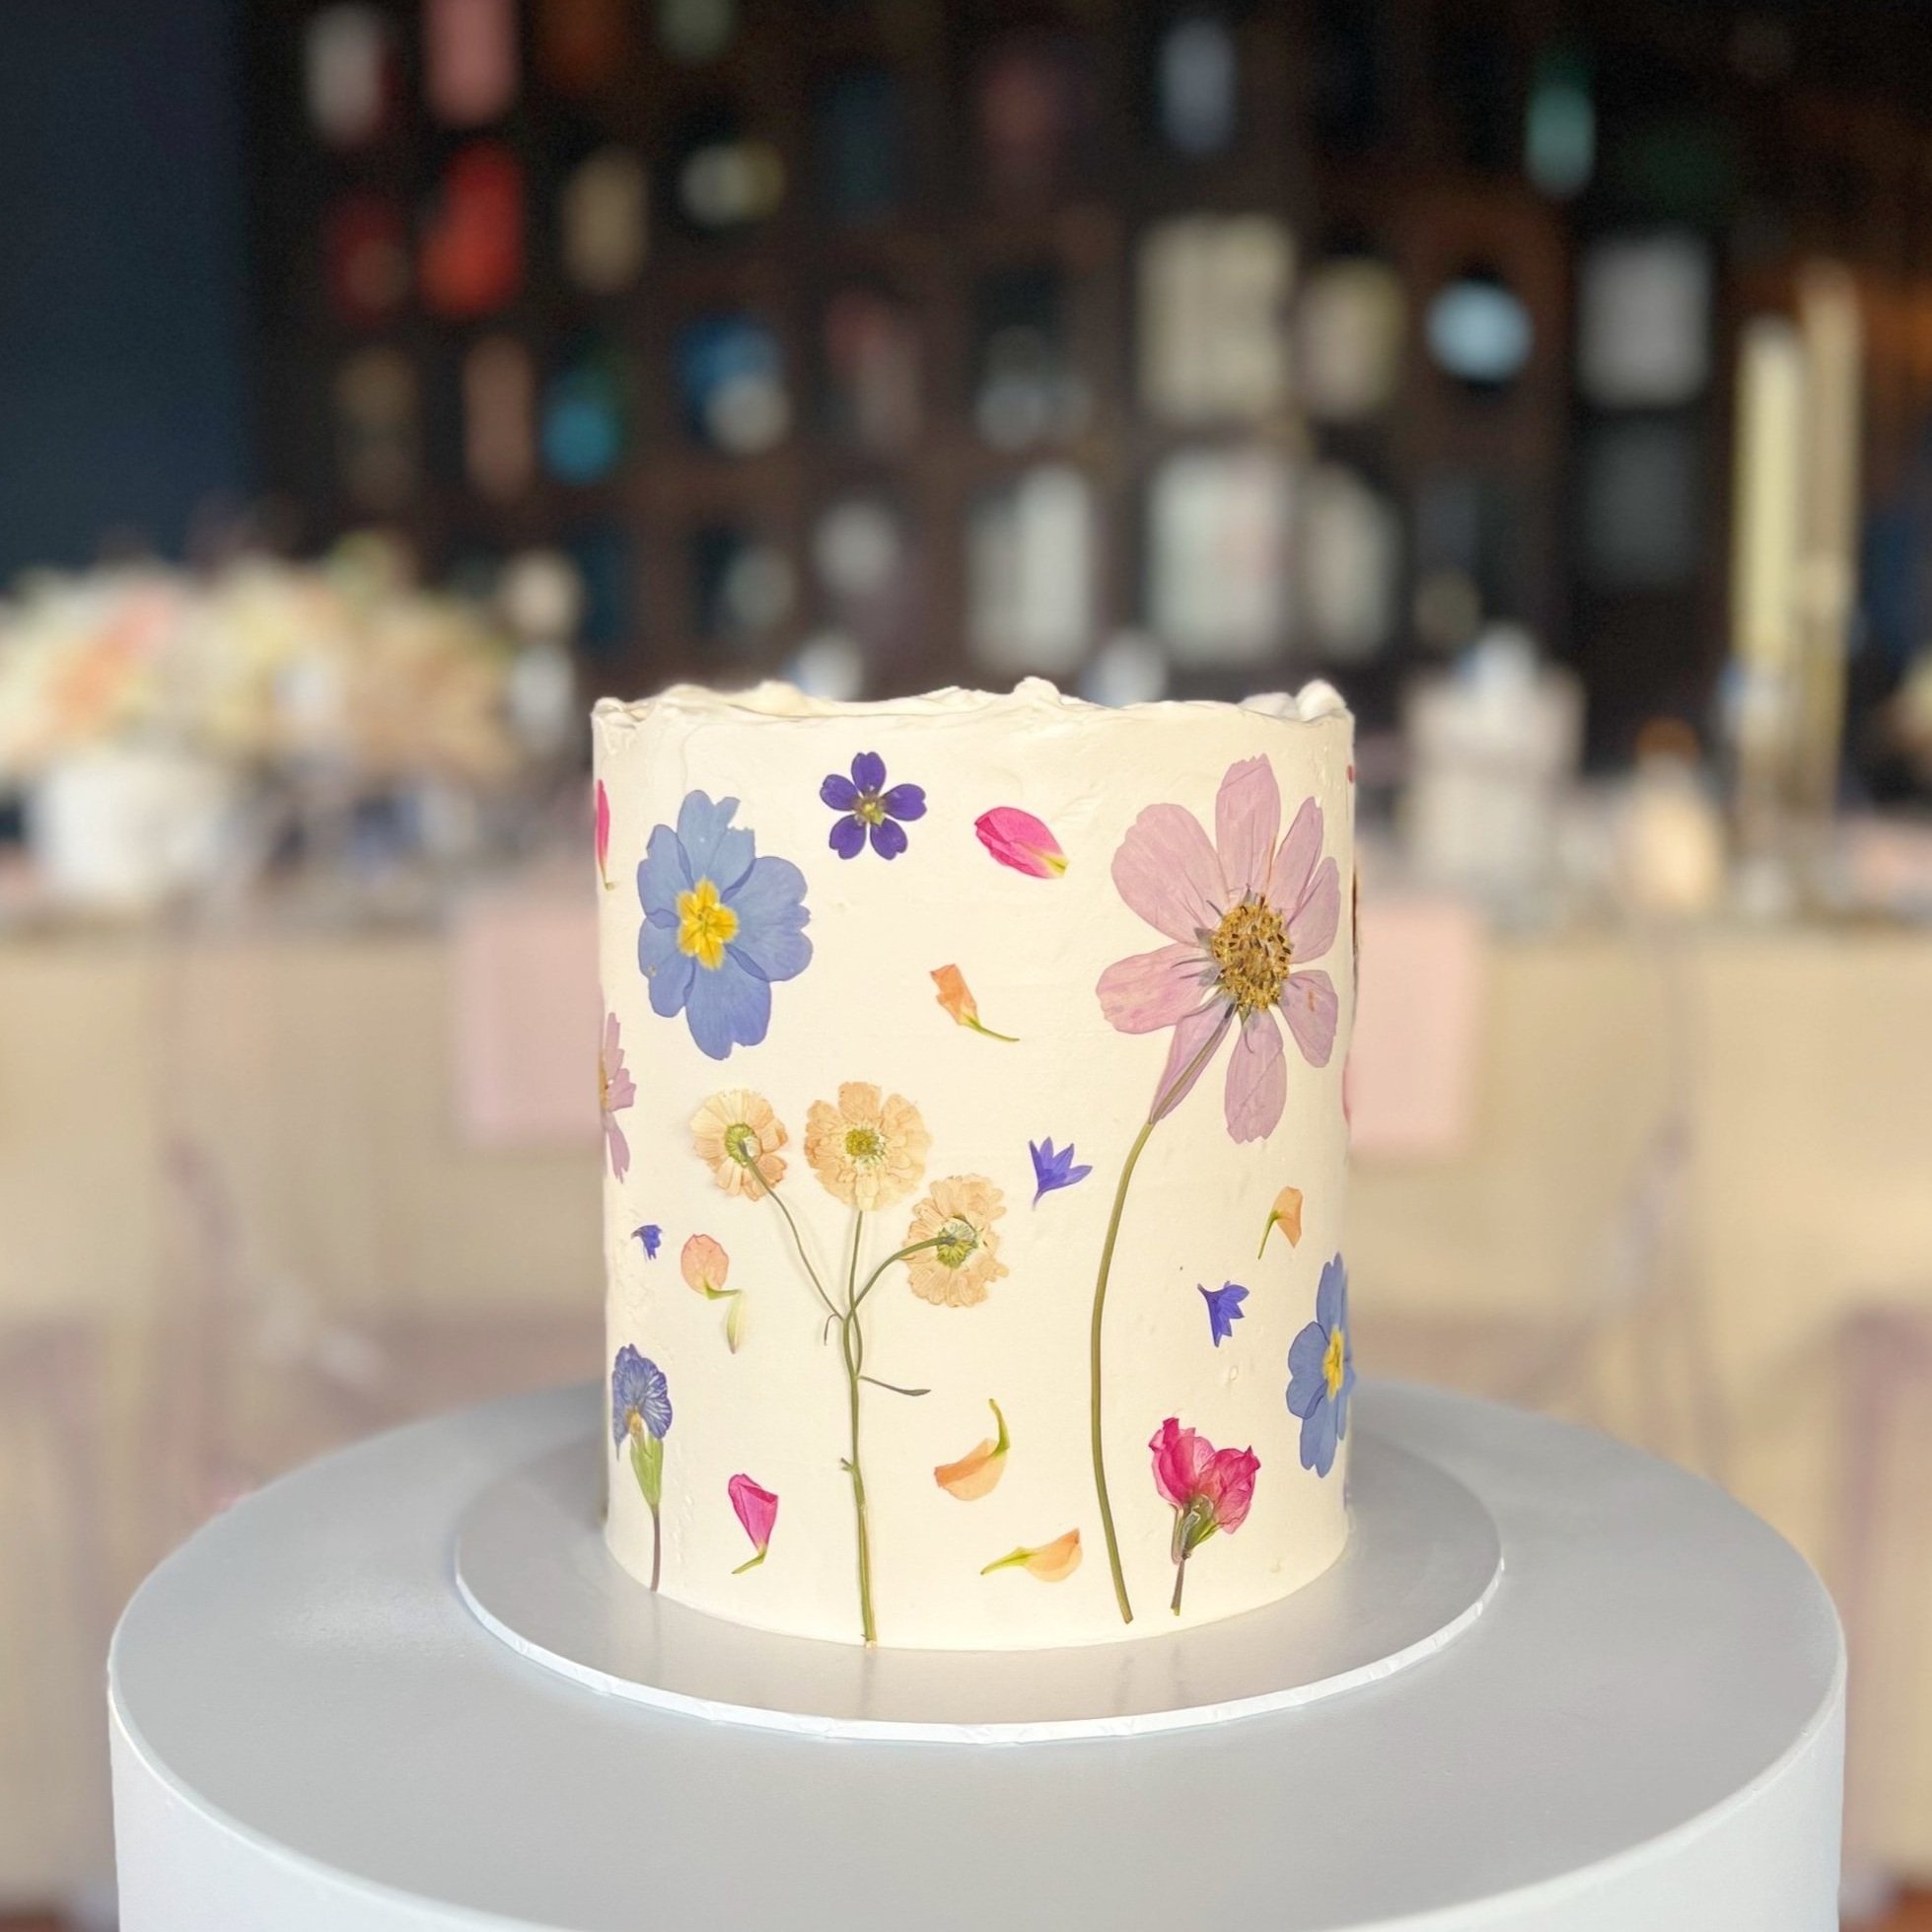 Discover 72+ cake decorating wellington latest